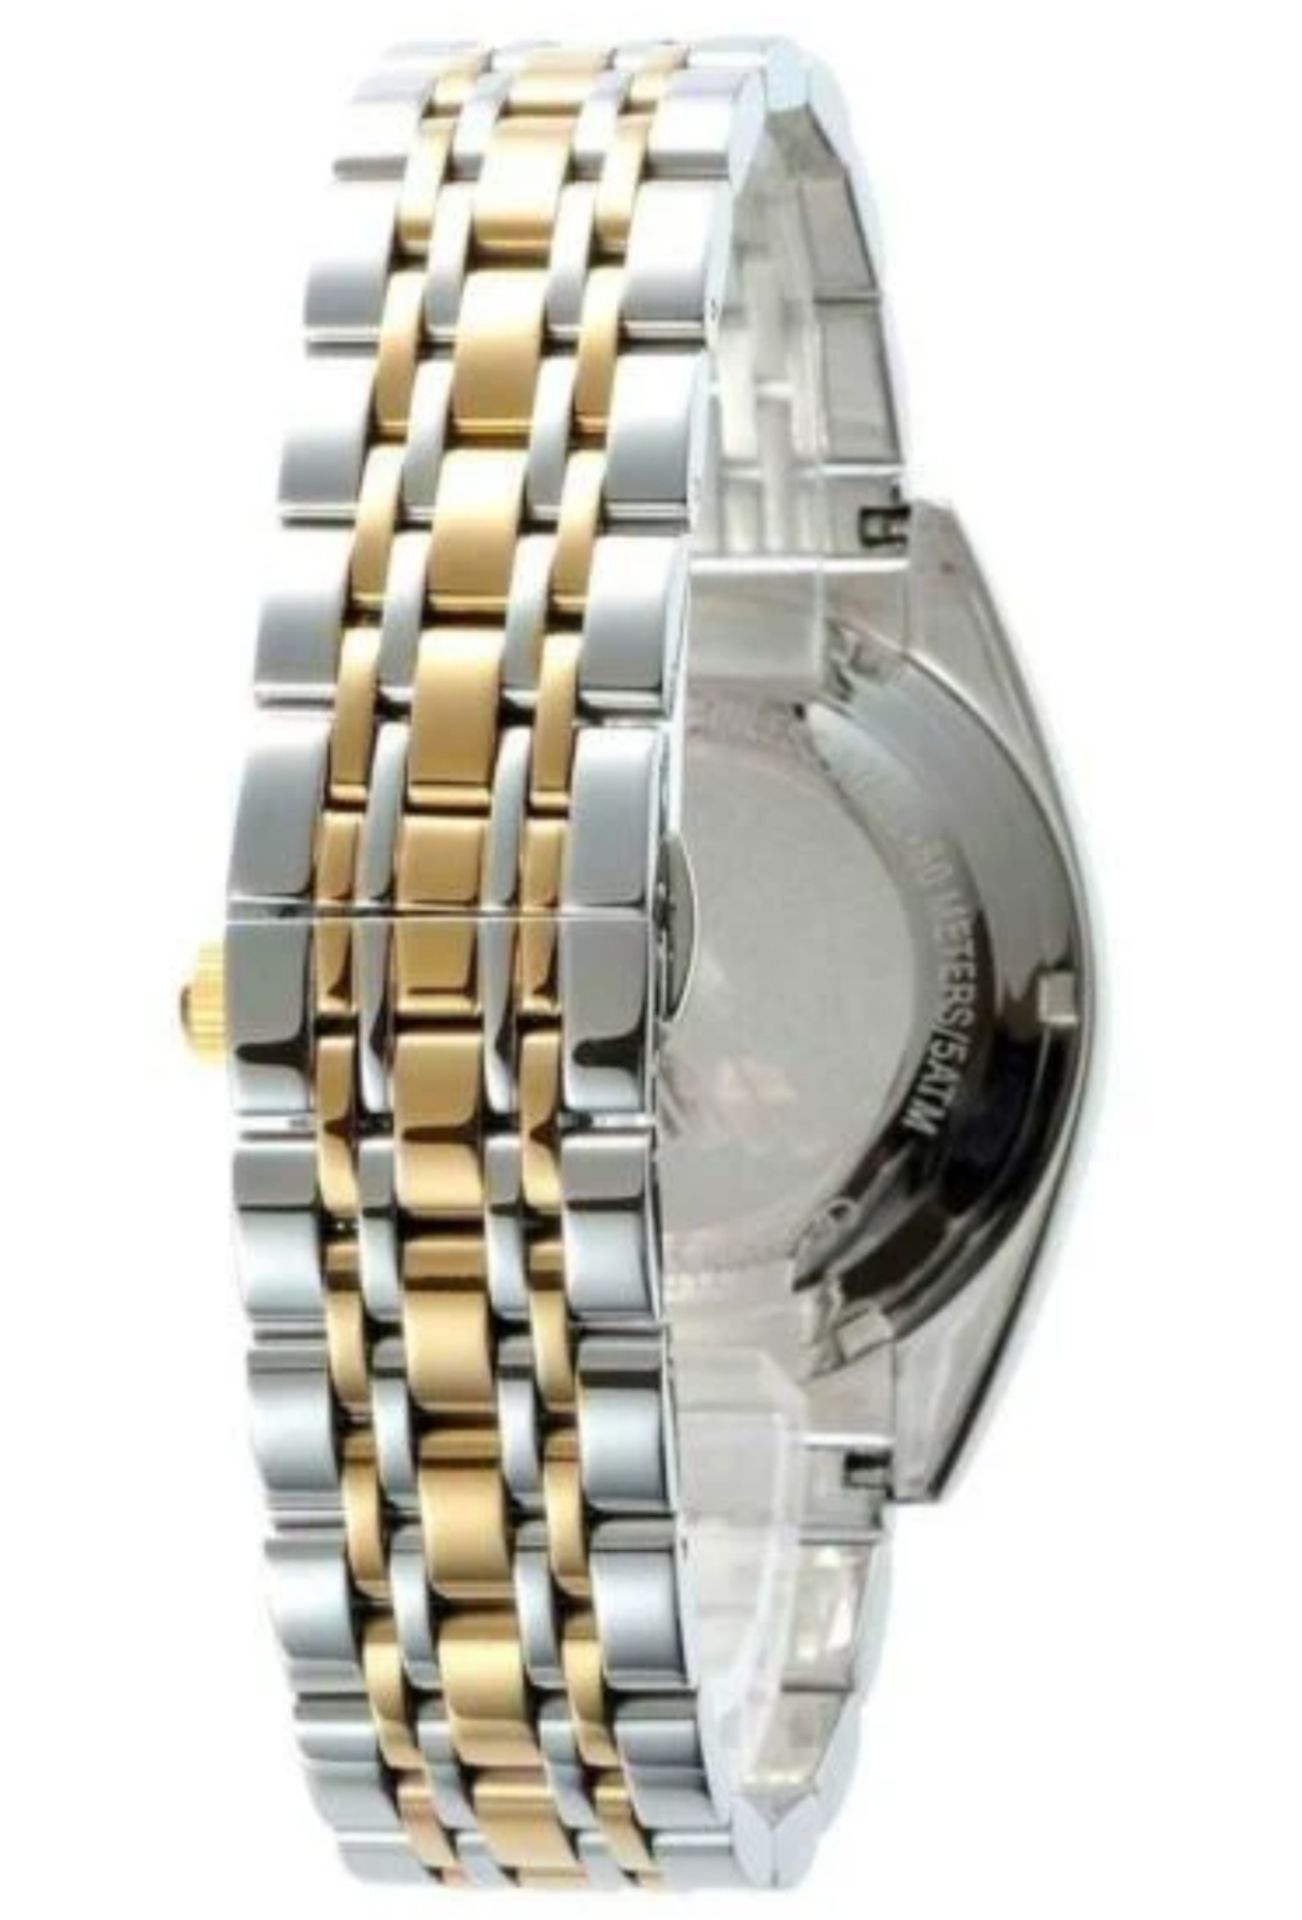 Emporio Armani AR0396 Men's two Tone Gold & Silver Quartz Chronograph Watch - Image 7 of 9